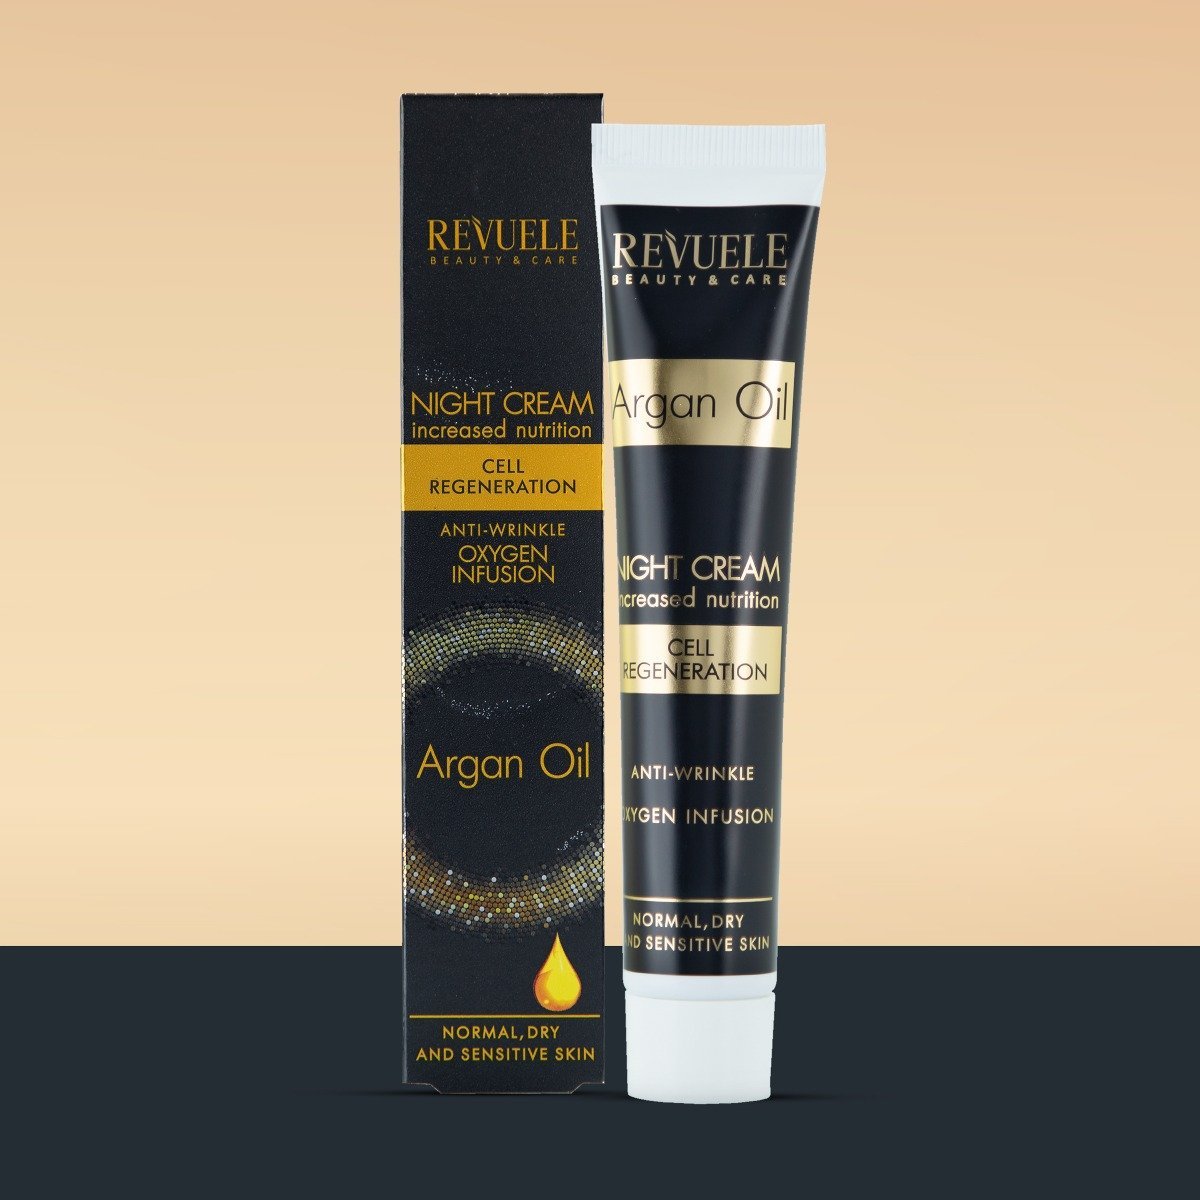 Revuele Anti Wrinkle Argan Oil Night Cream With Increased Nutrition